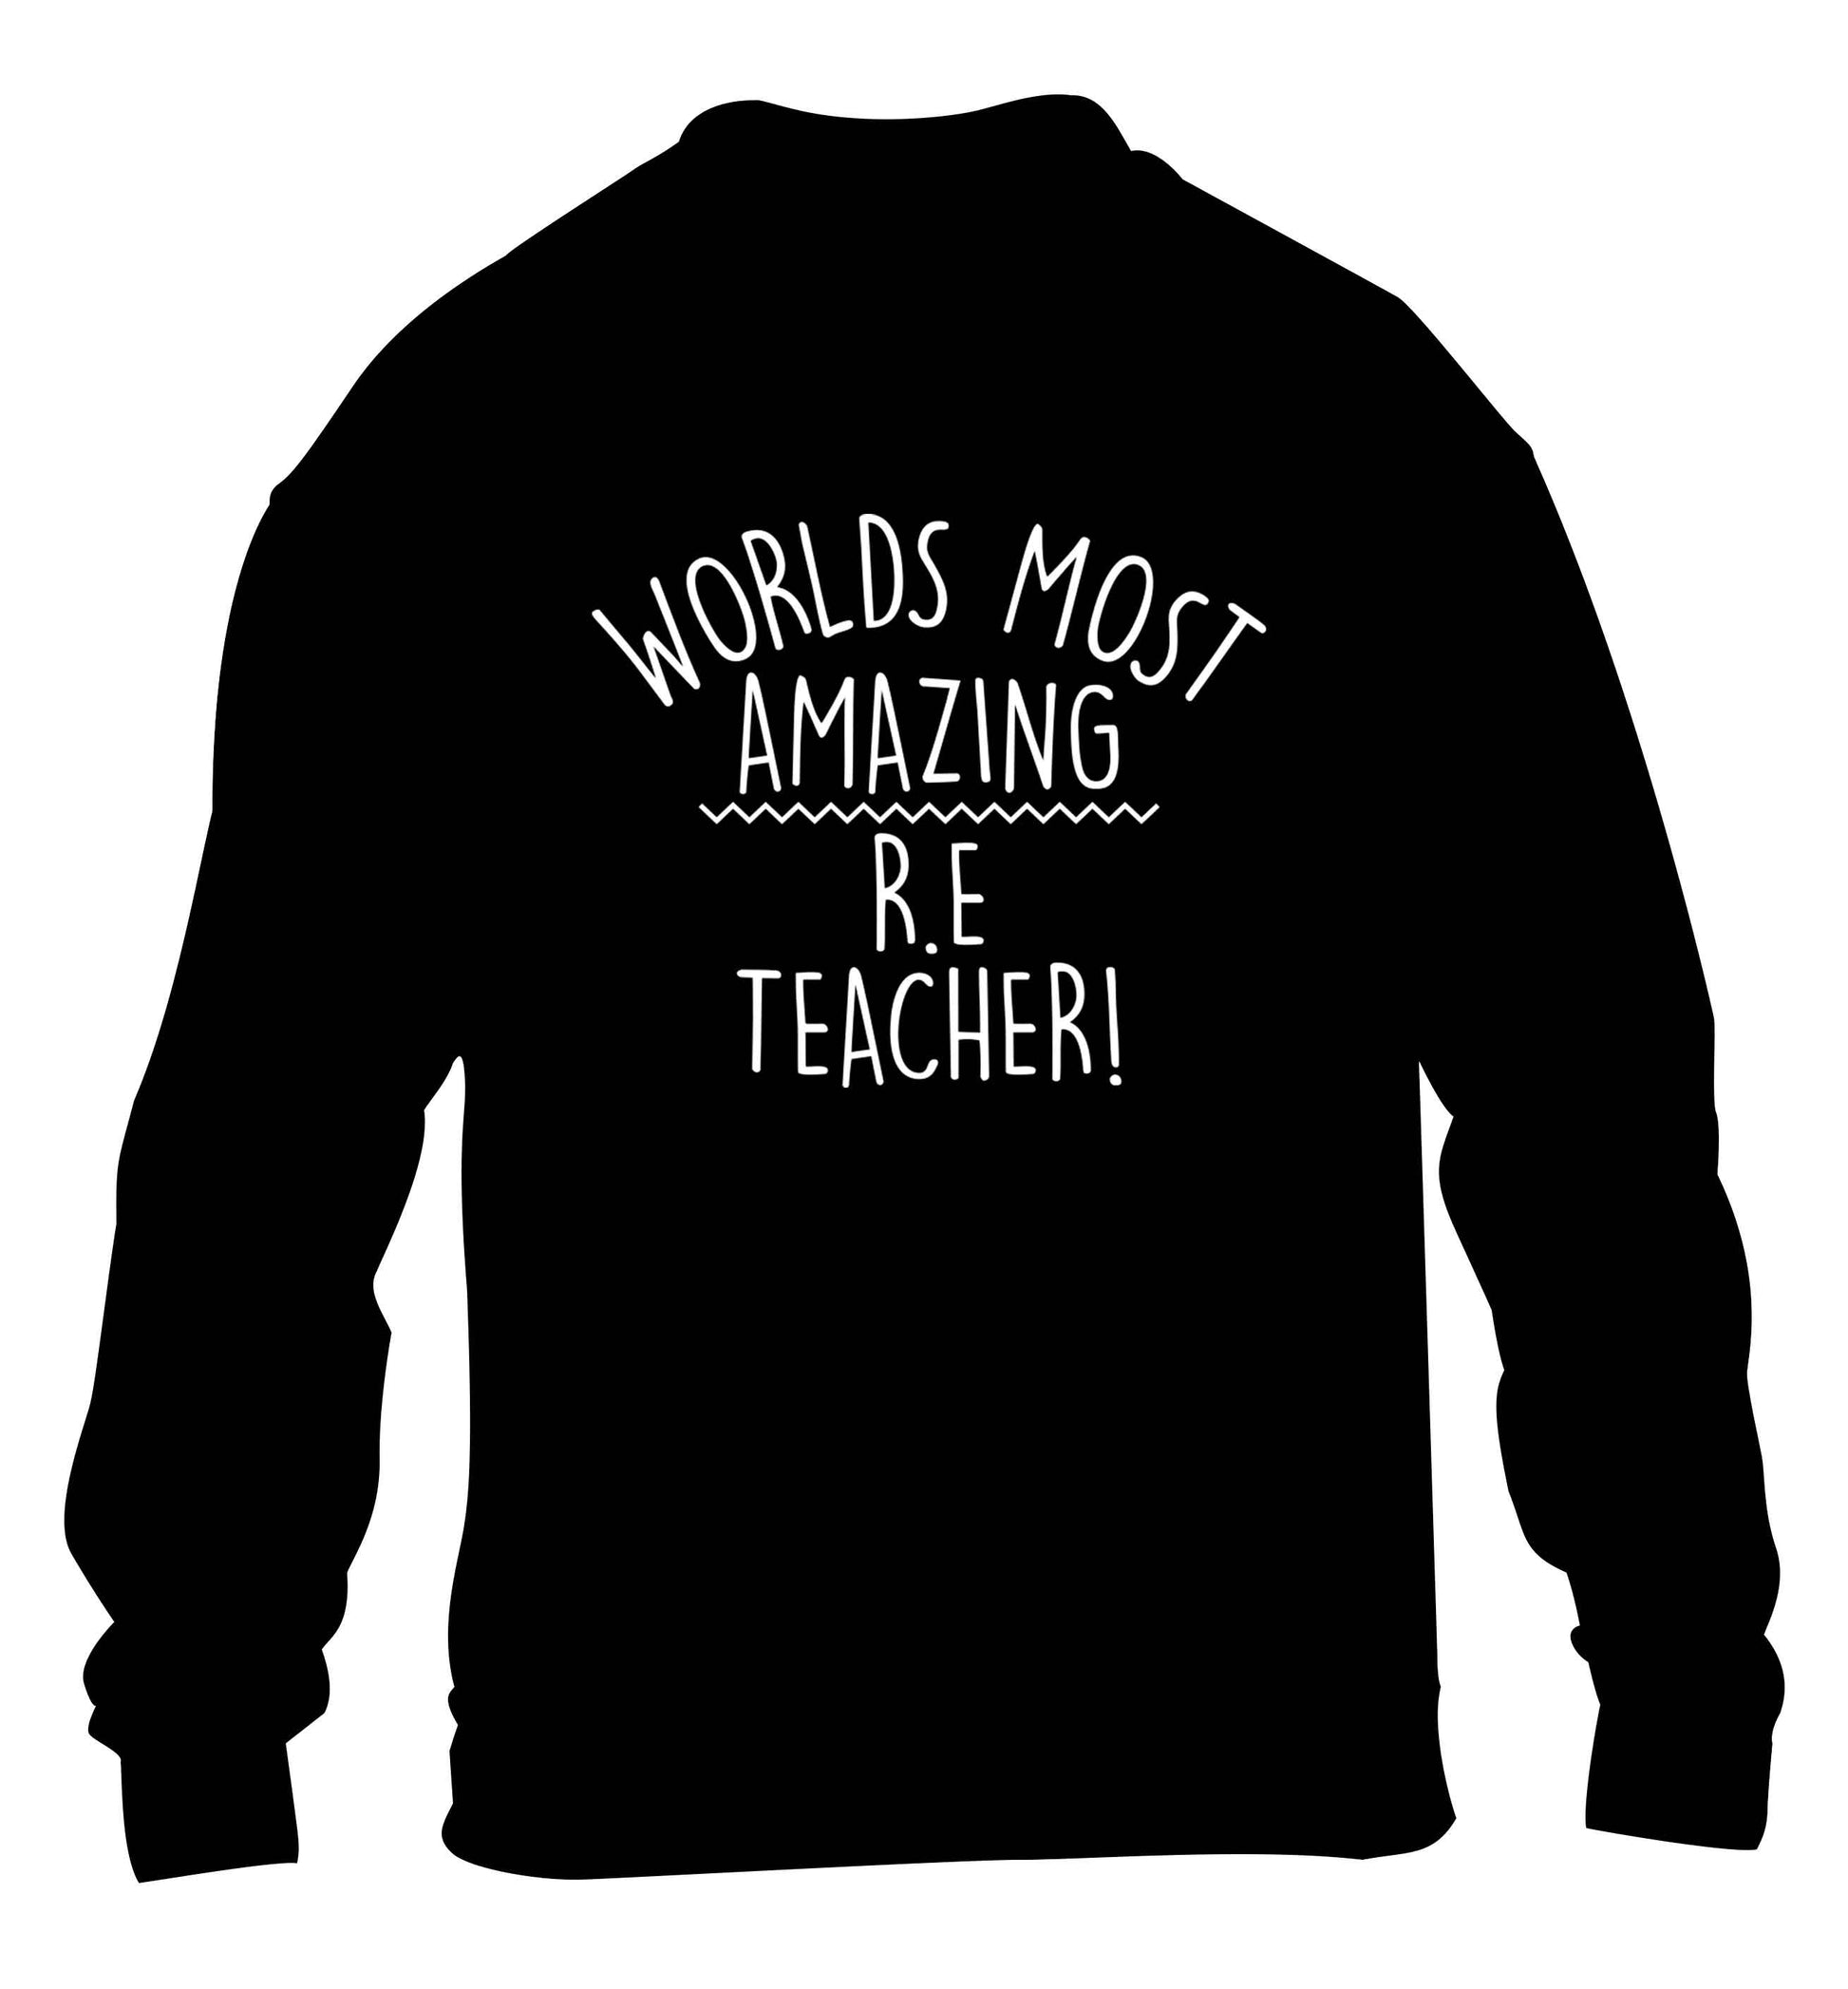 Worlds most amazing R.E teacher children's black sweater 12-13 Years